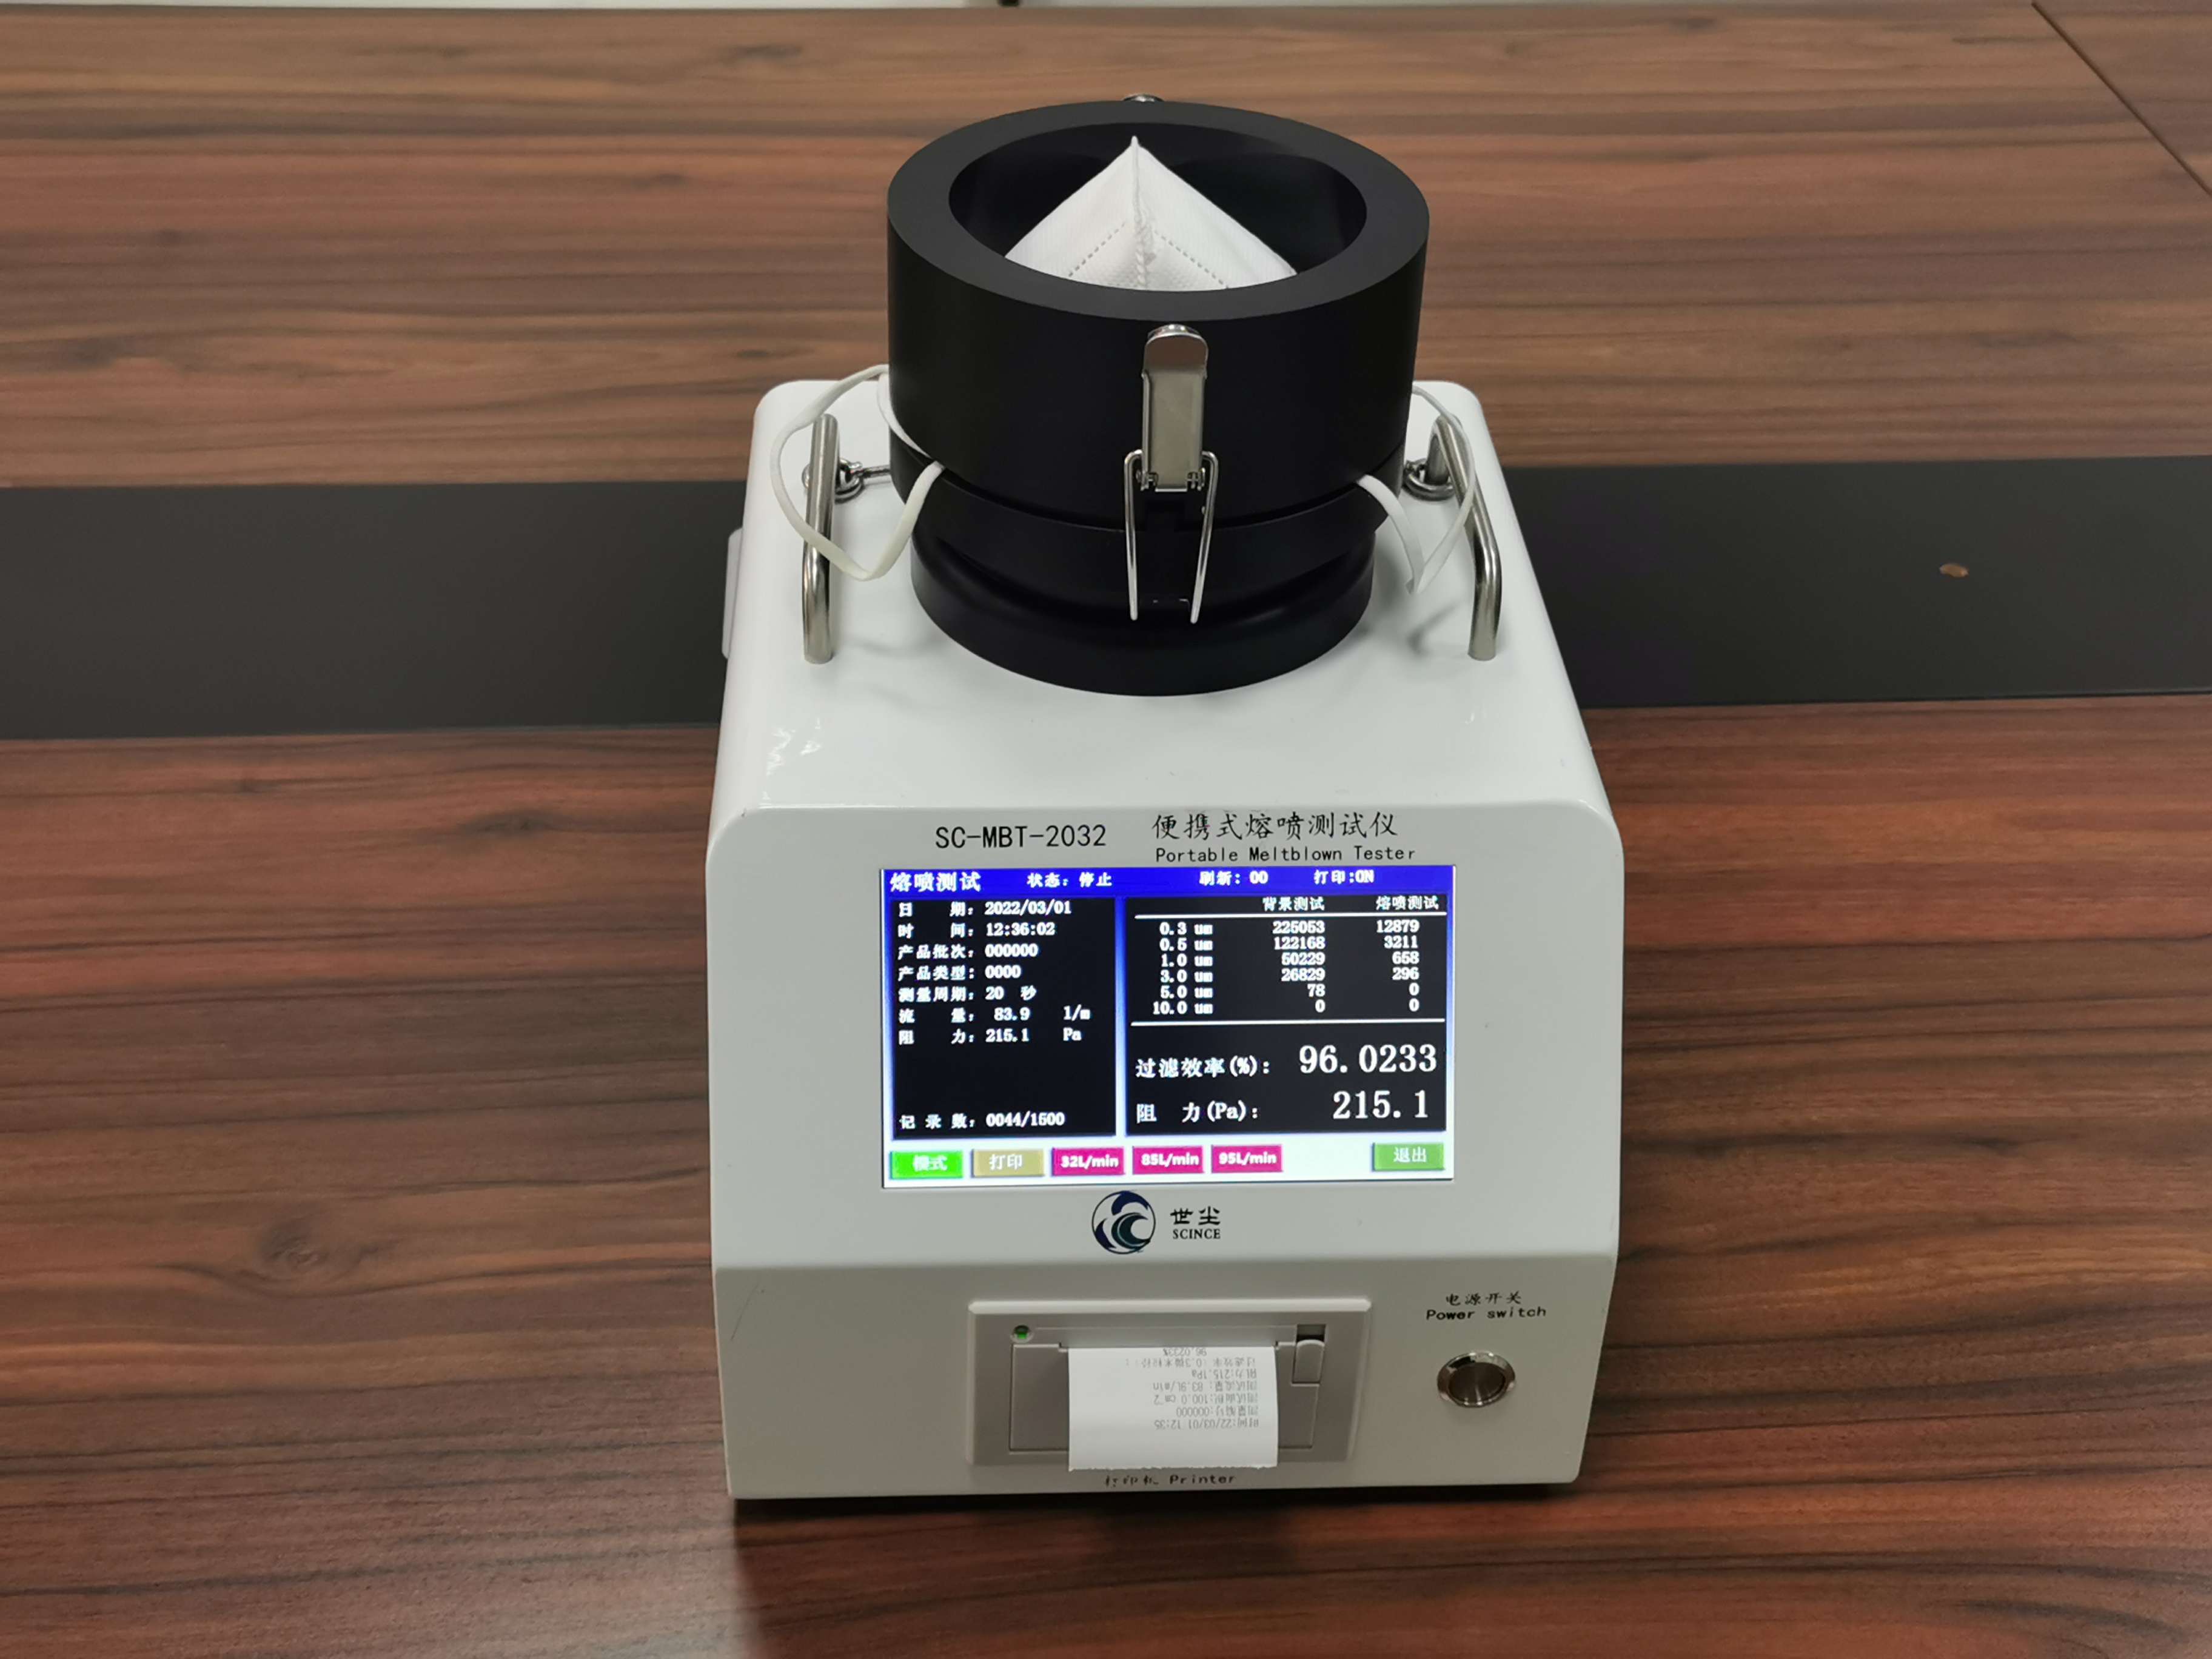 Portable Melt-blown Material Test Equipment Filter Media Tester SC-MBT-2032